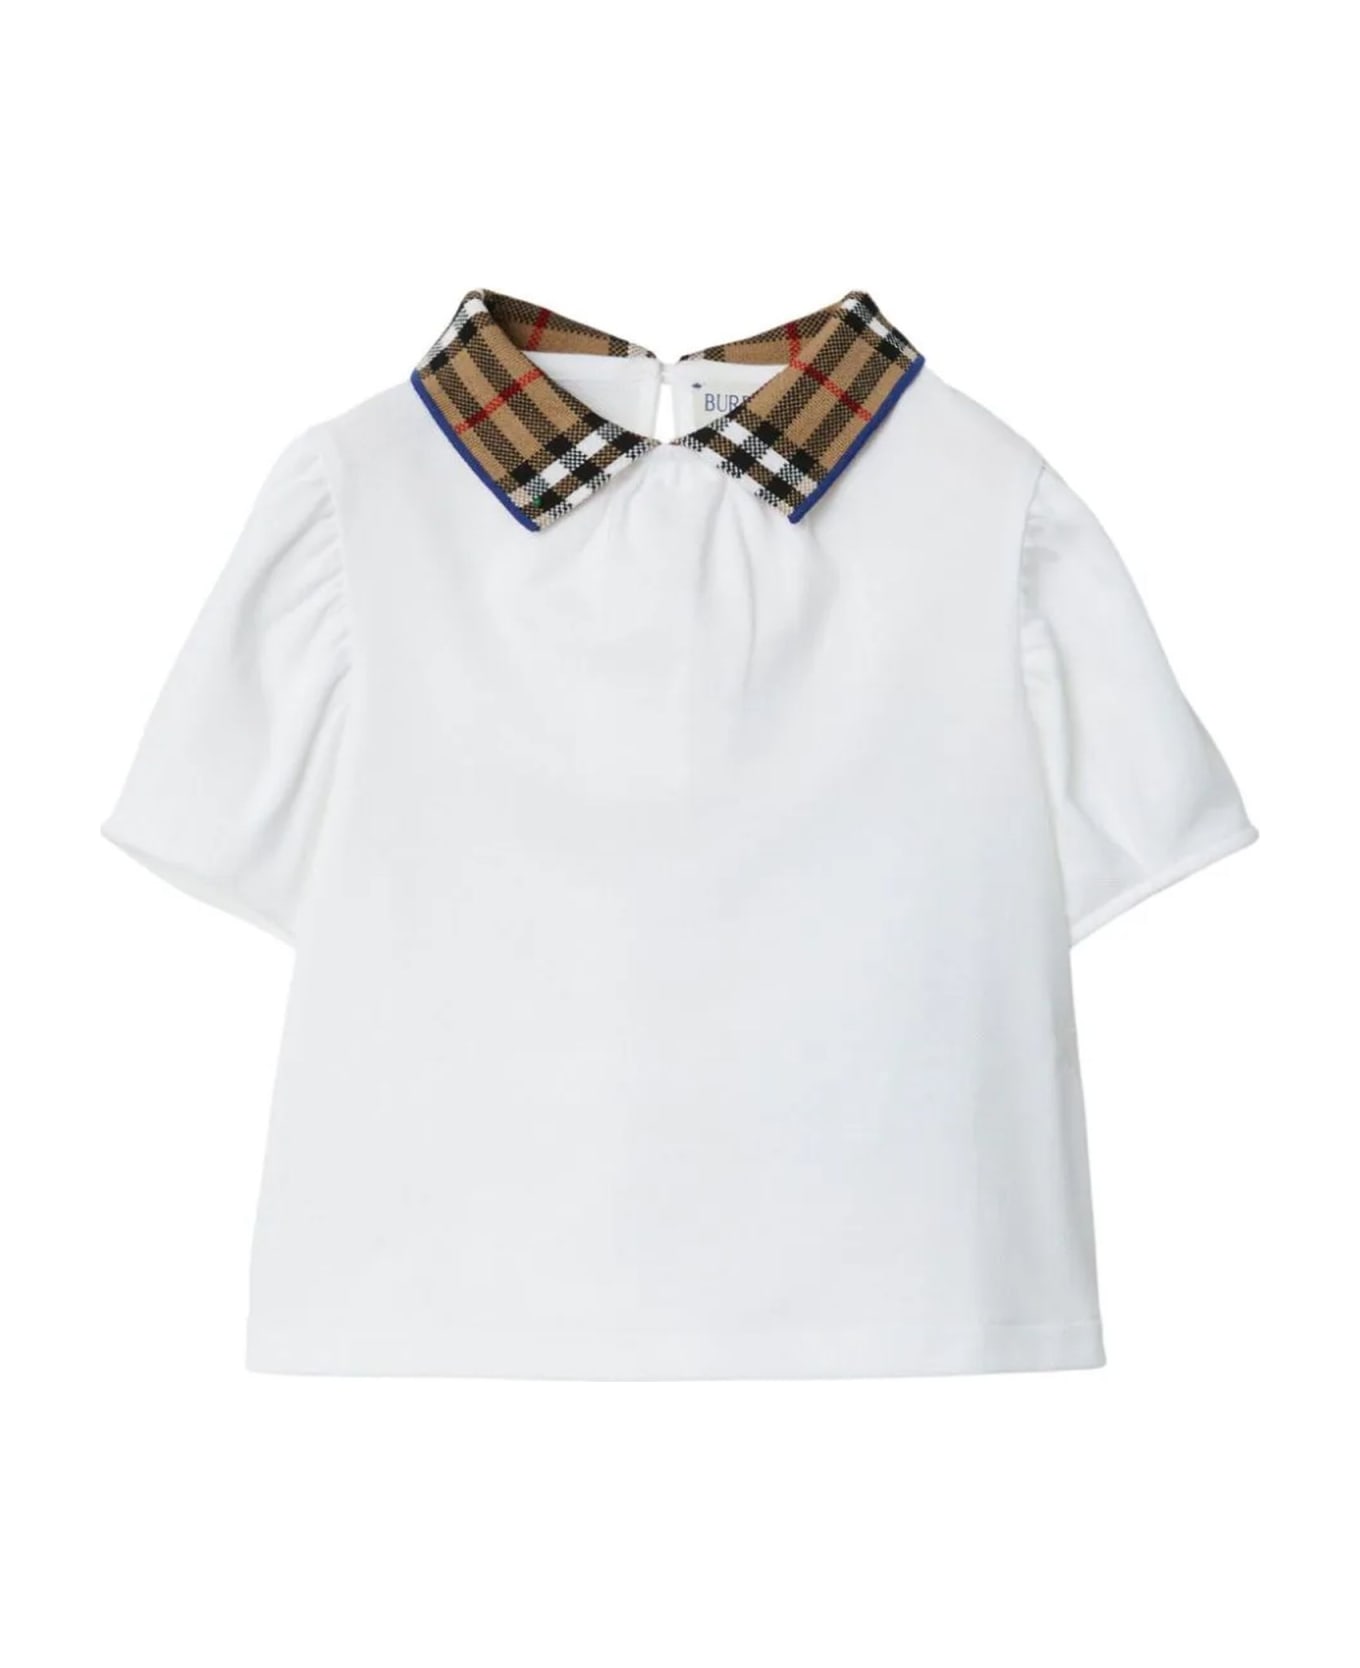 Burberry White Stretch-cotton Polo Shirt